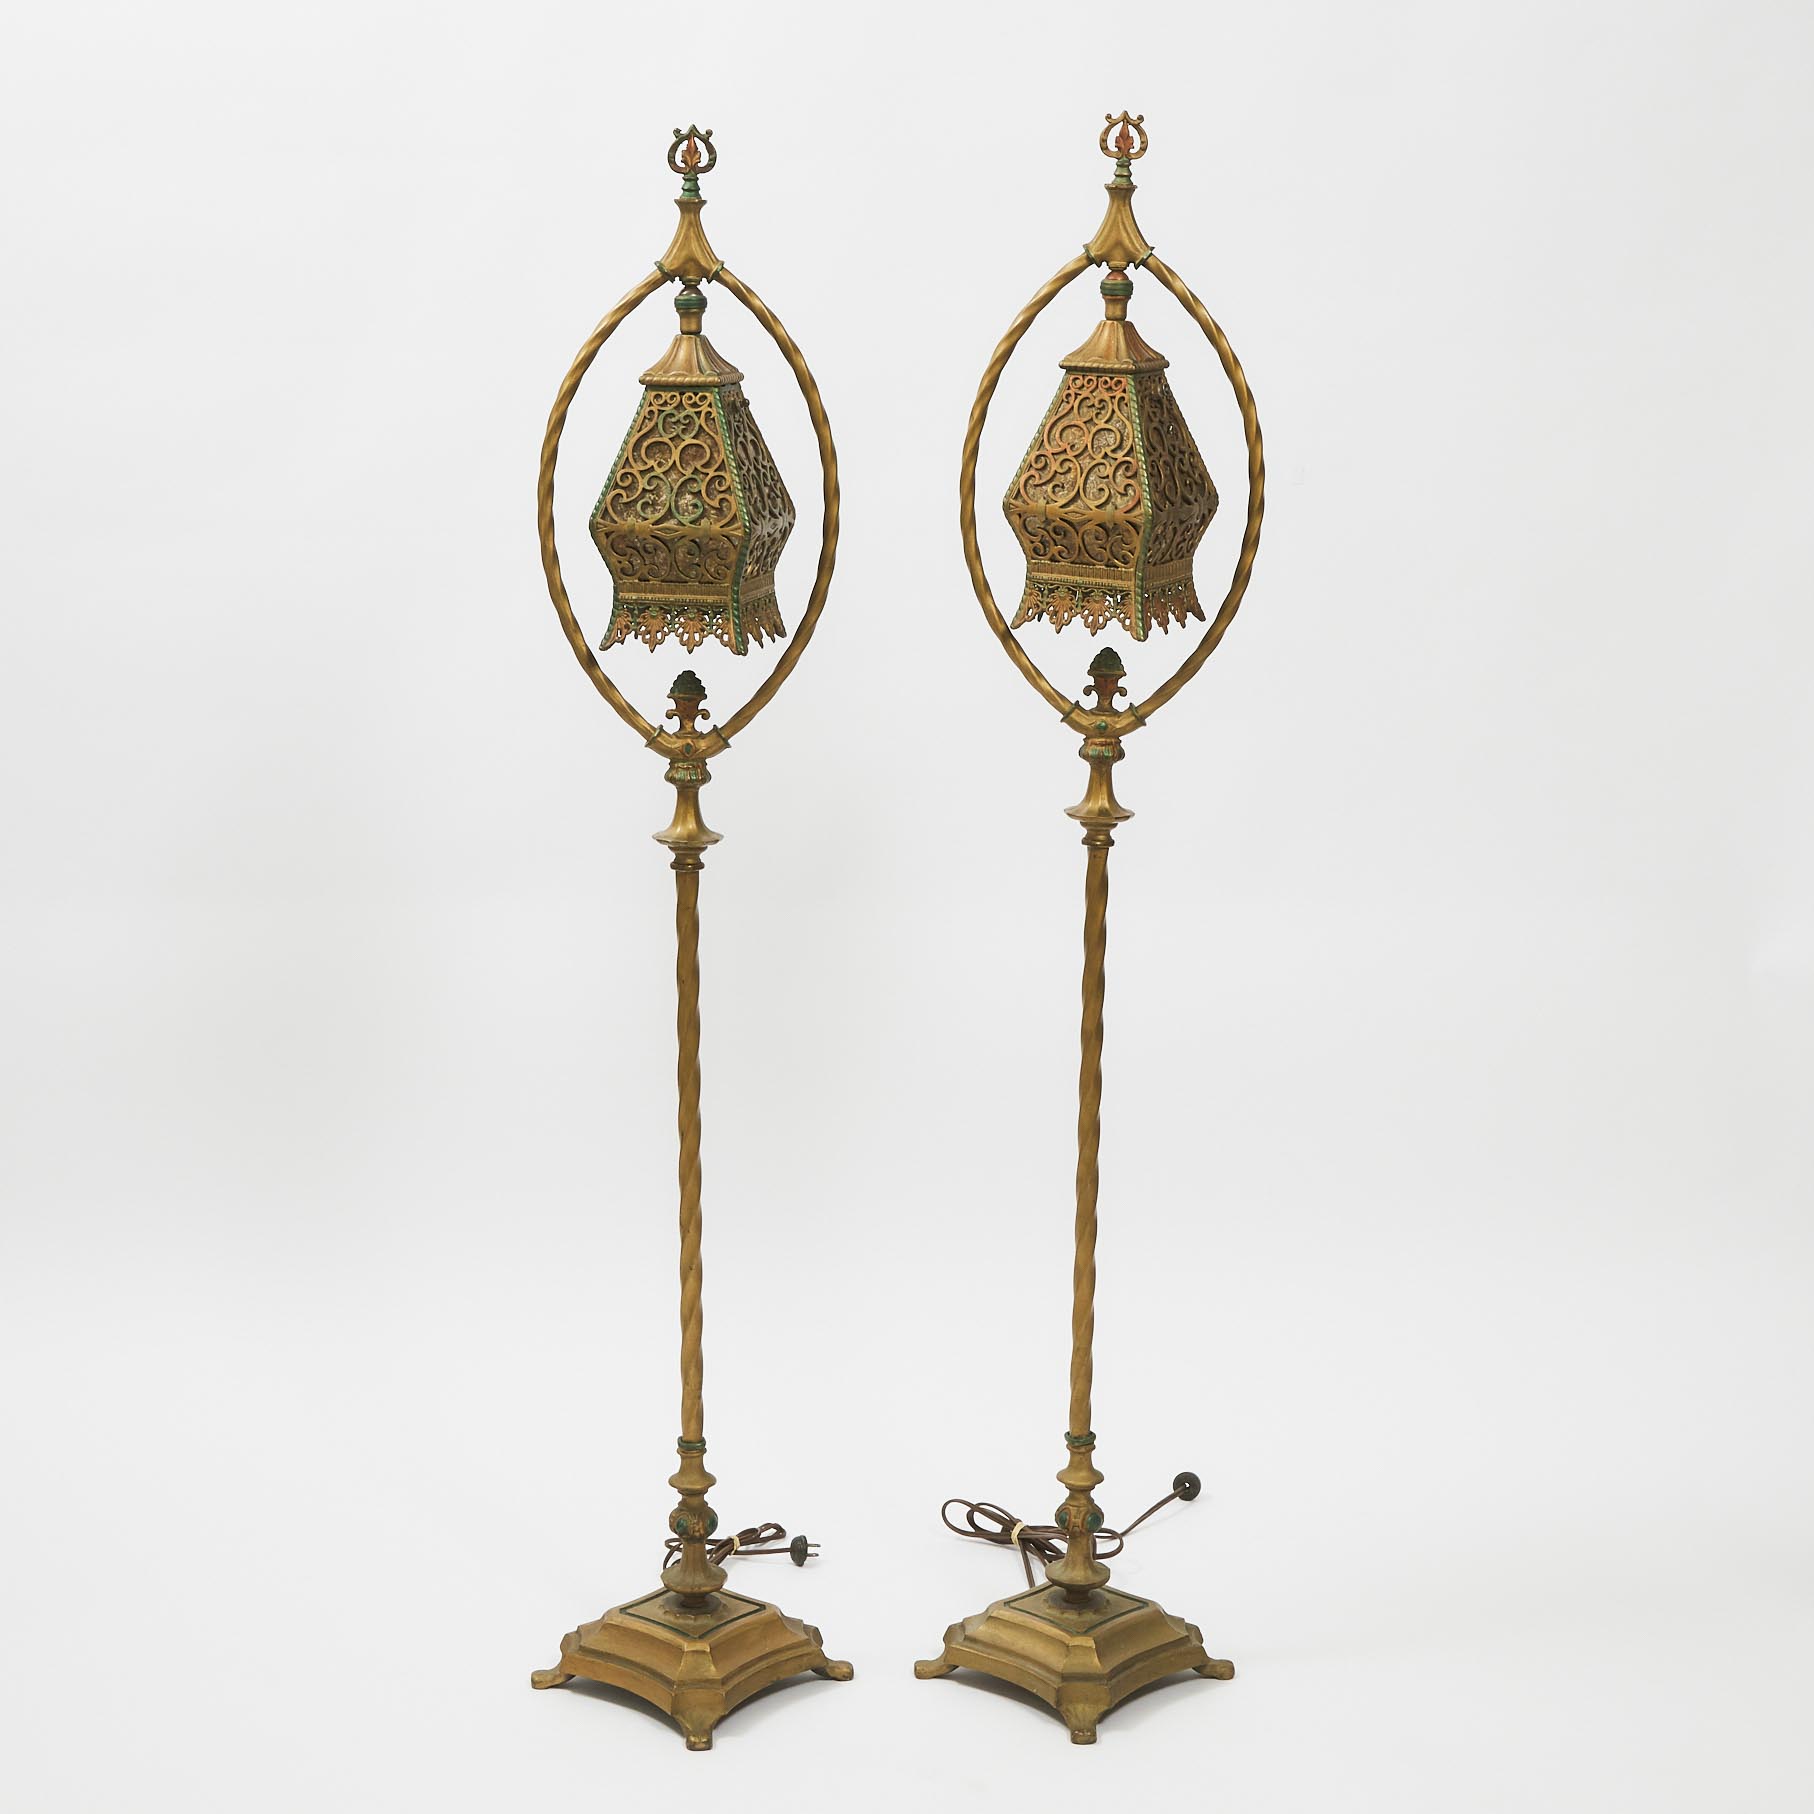 Pair of Orientalist Gilt and Polychromed Metal Floor Lamps, c.1900